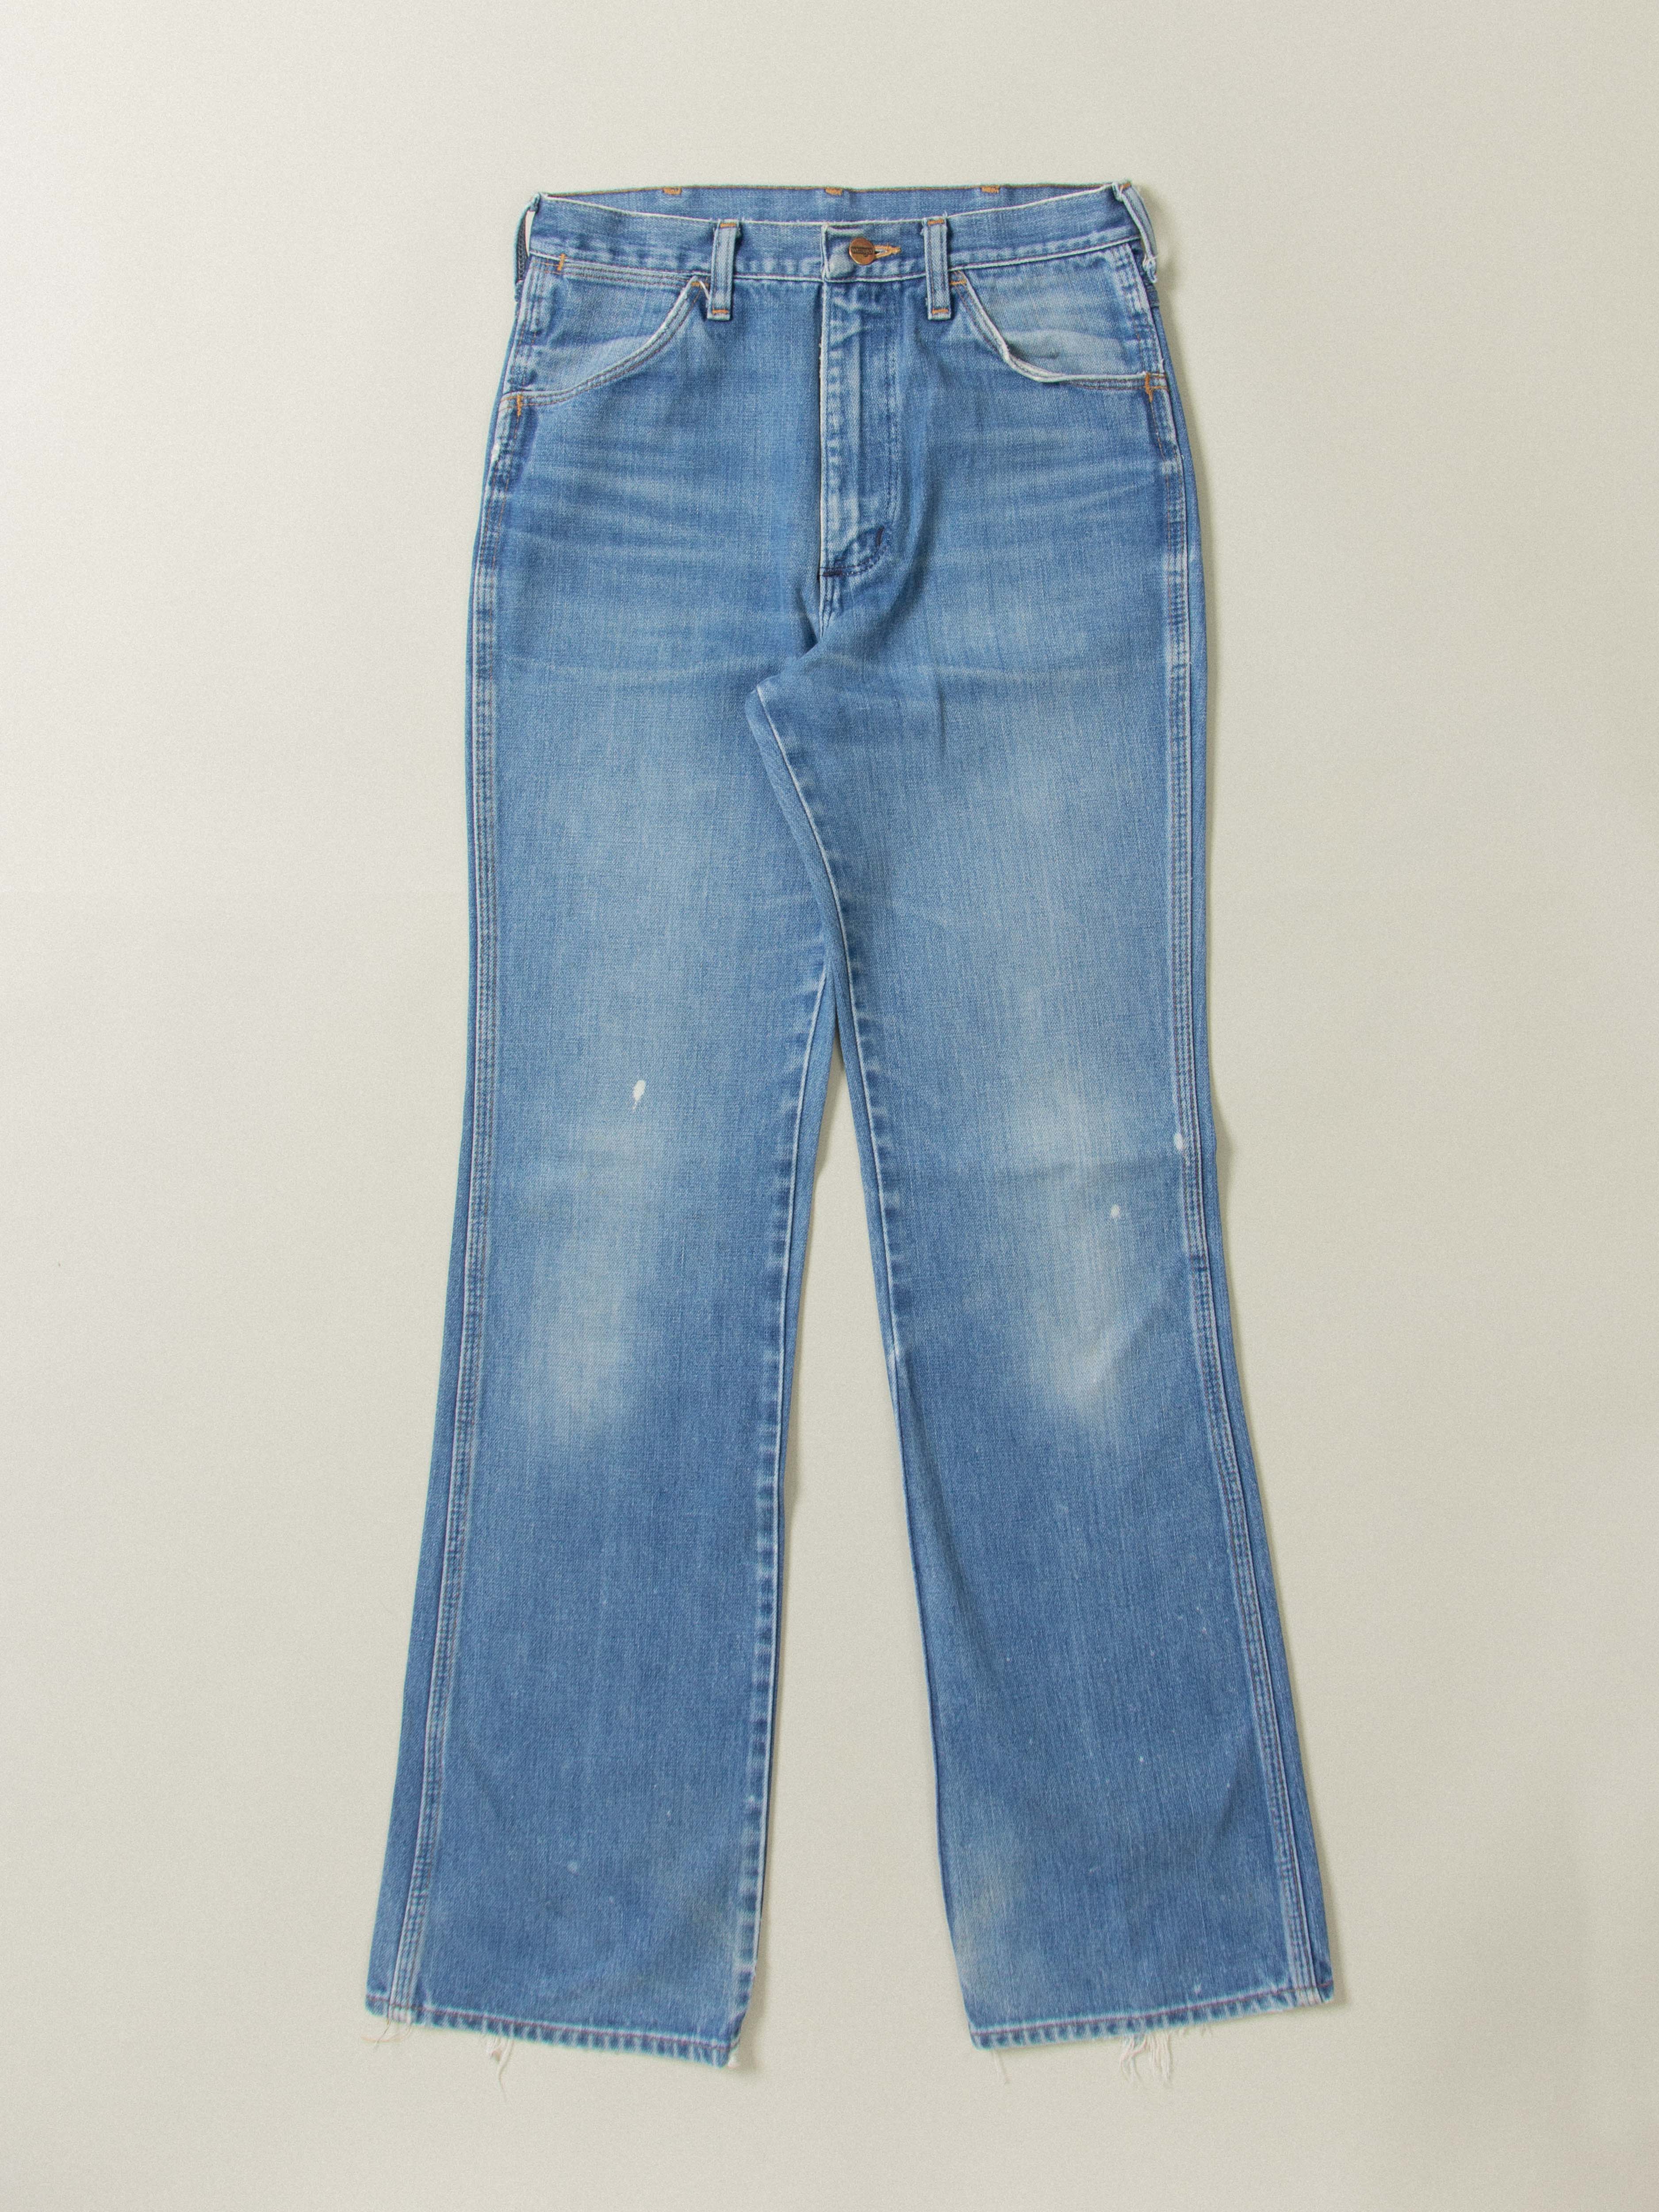 Vtg 1980s Wrangler 'No Fault' Jean - Made in USA (30x34)